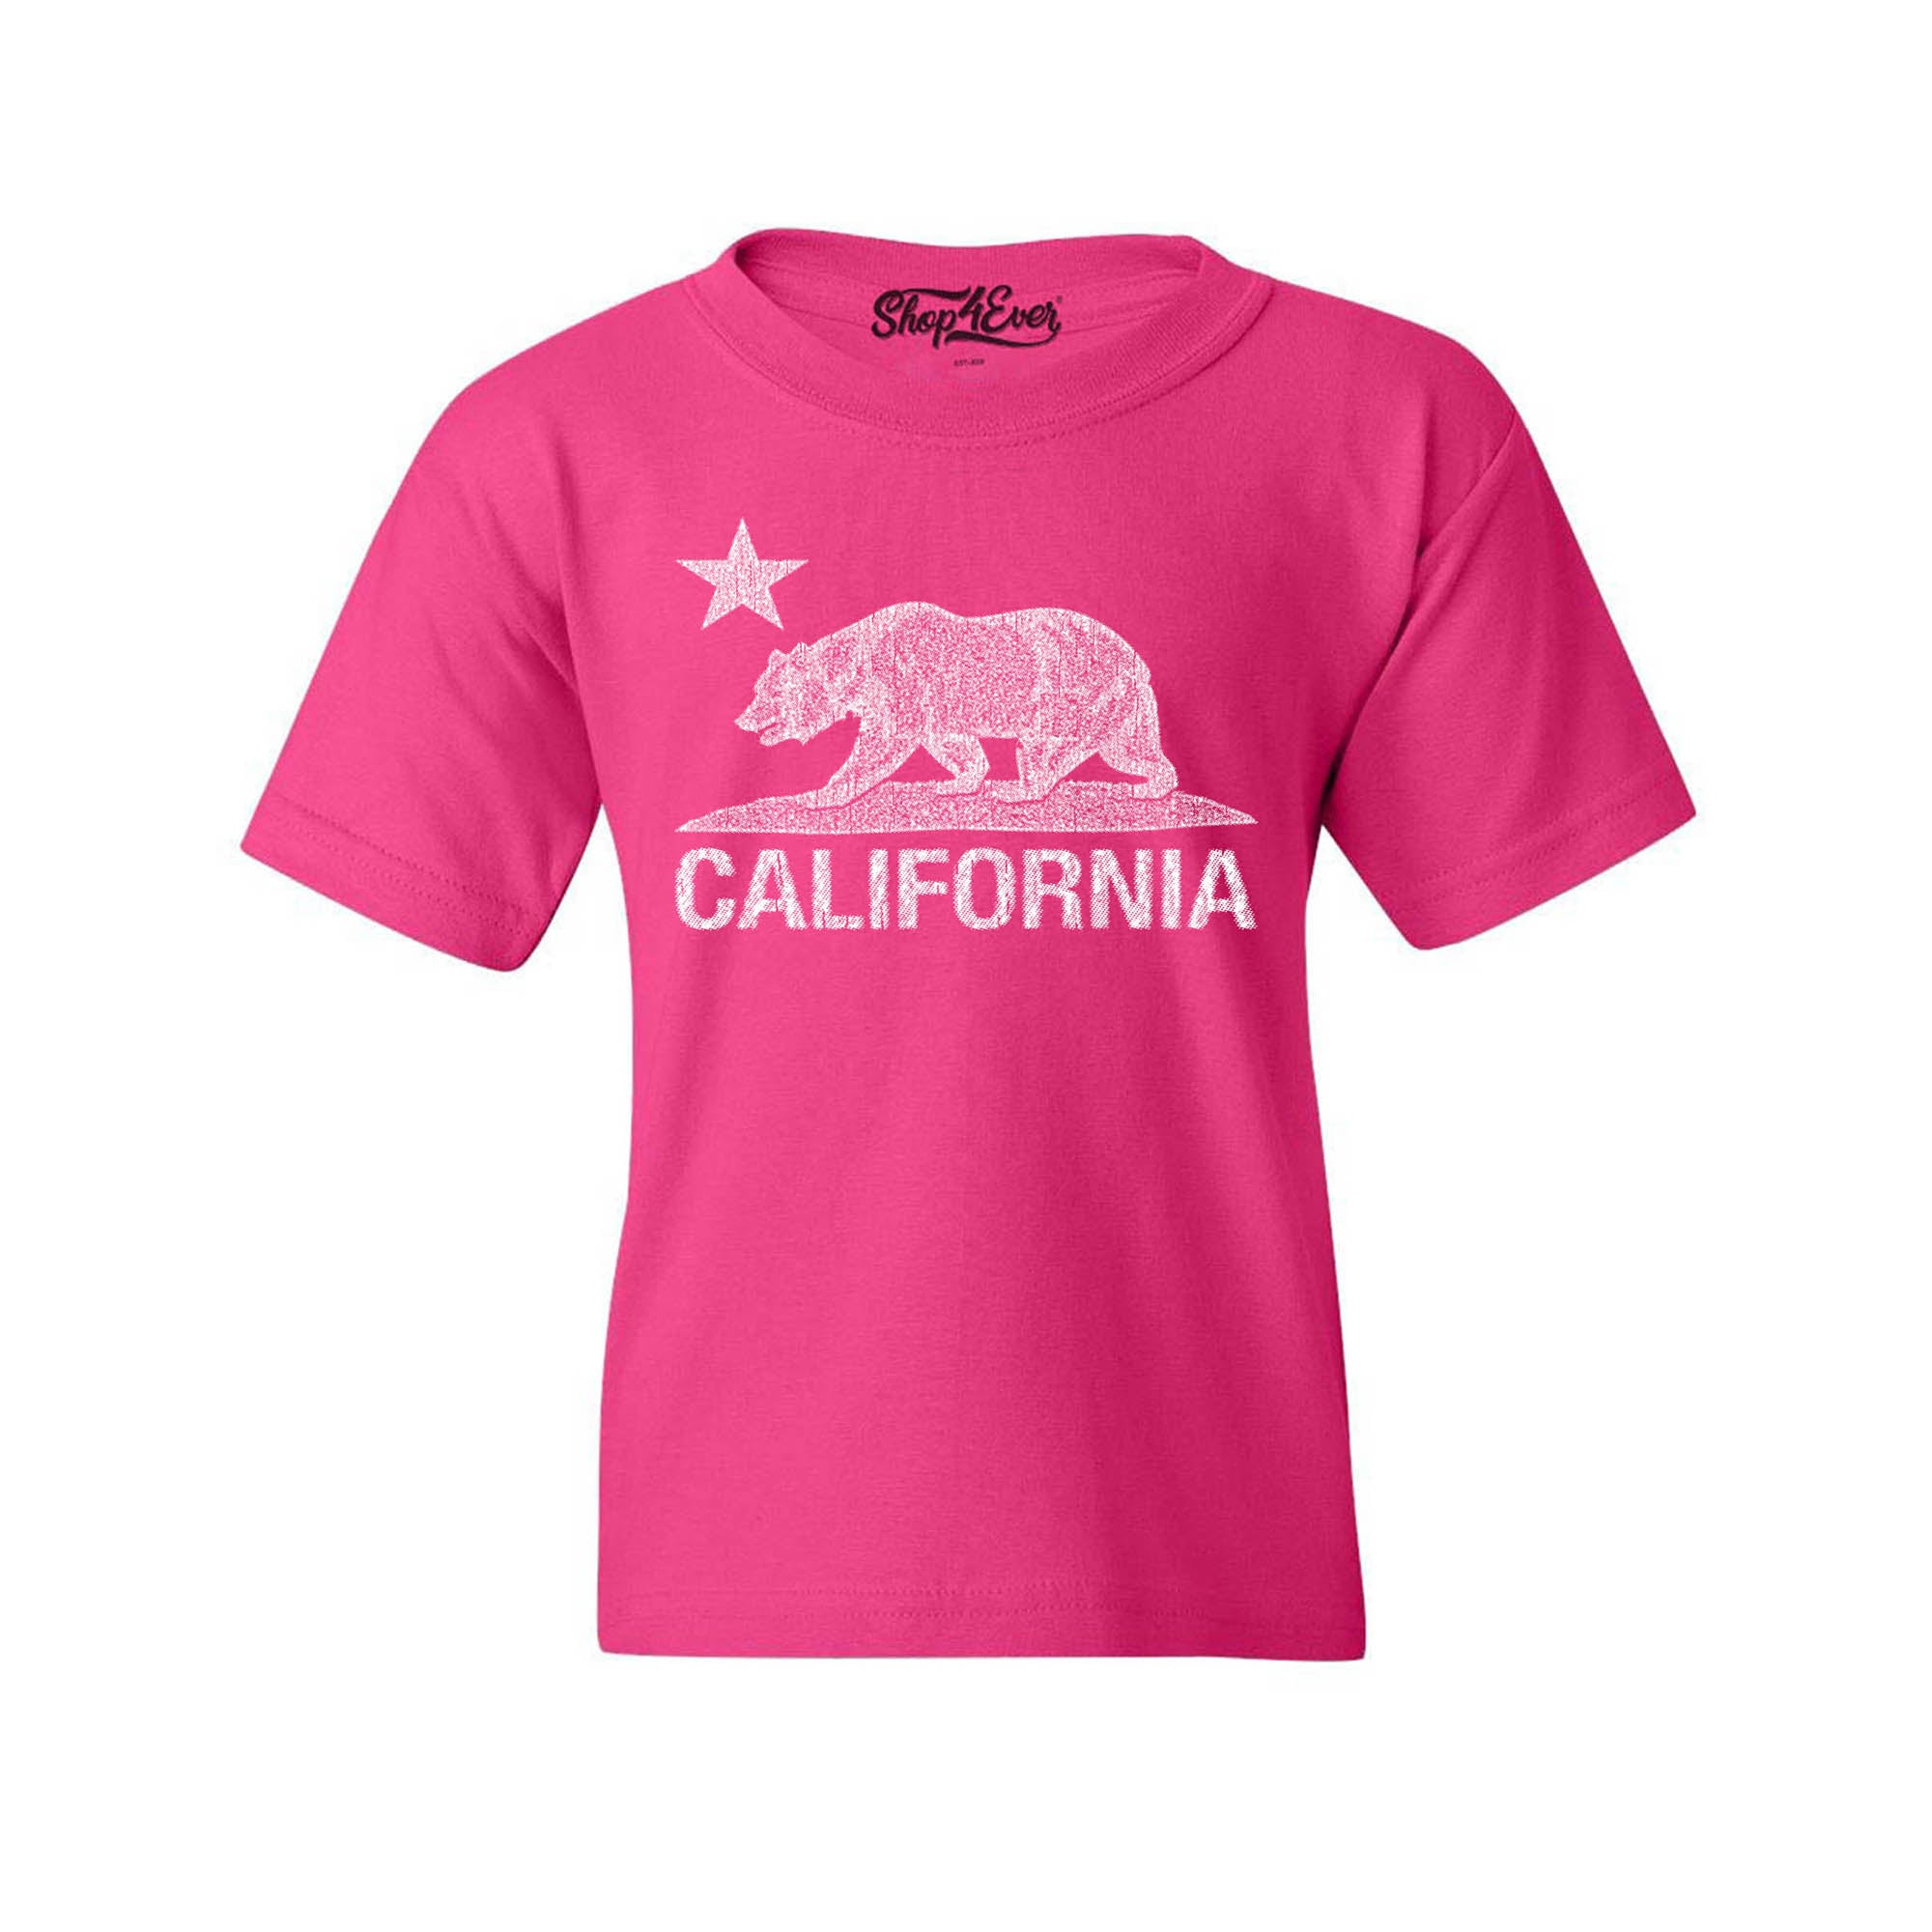 California Distressed White Bear Youth's T-Shirt Cali Child Kids Tee Shirts